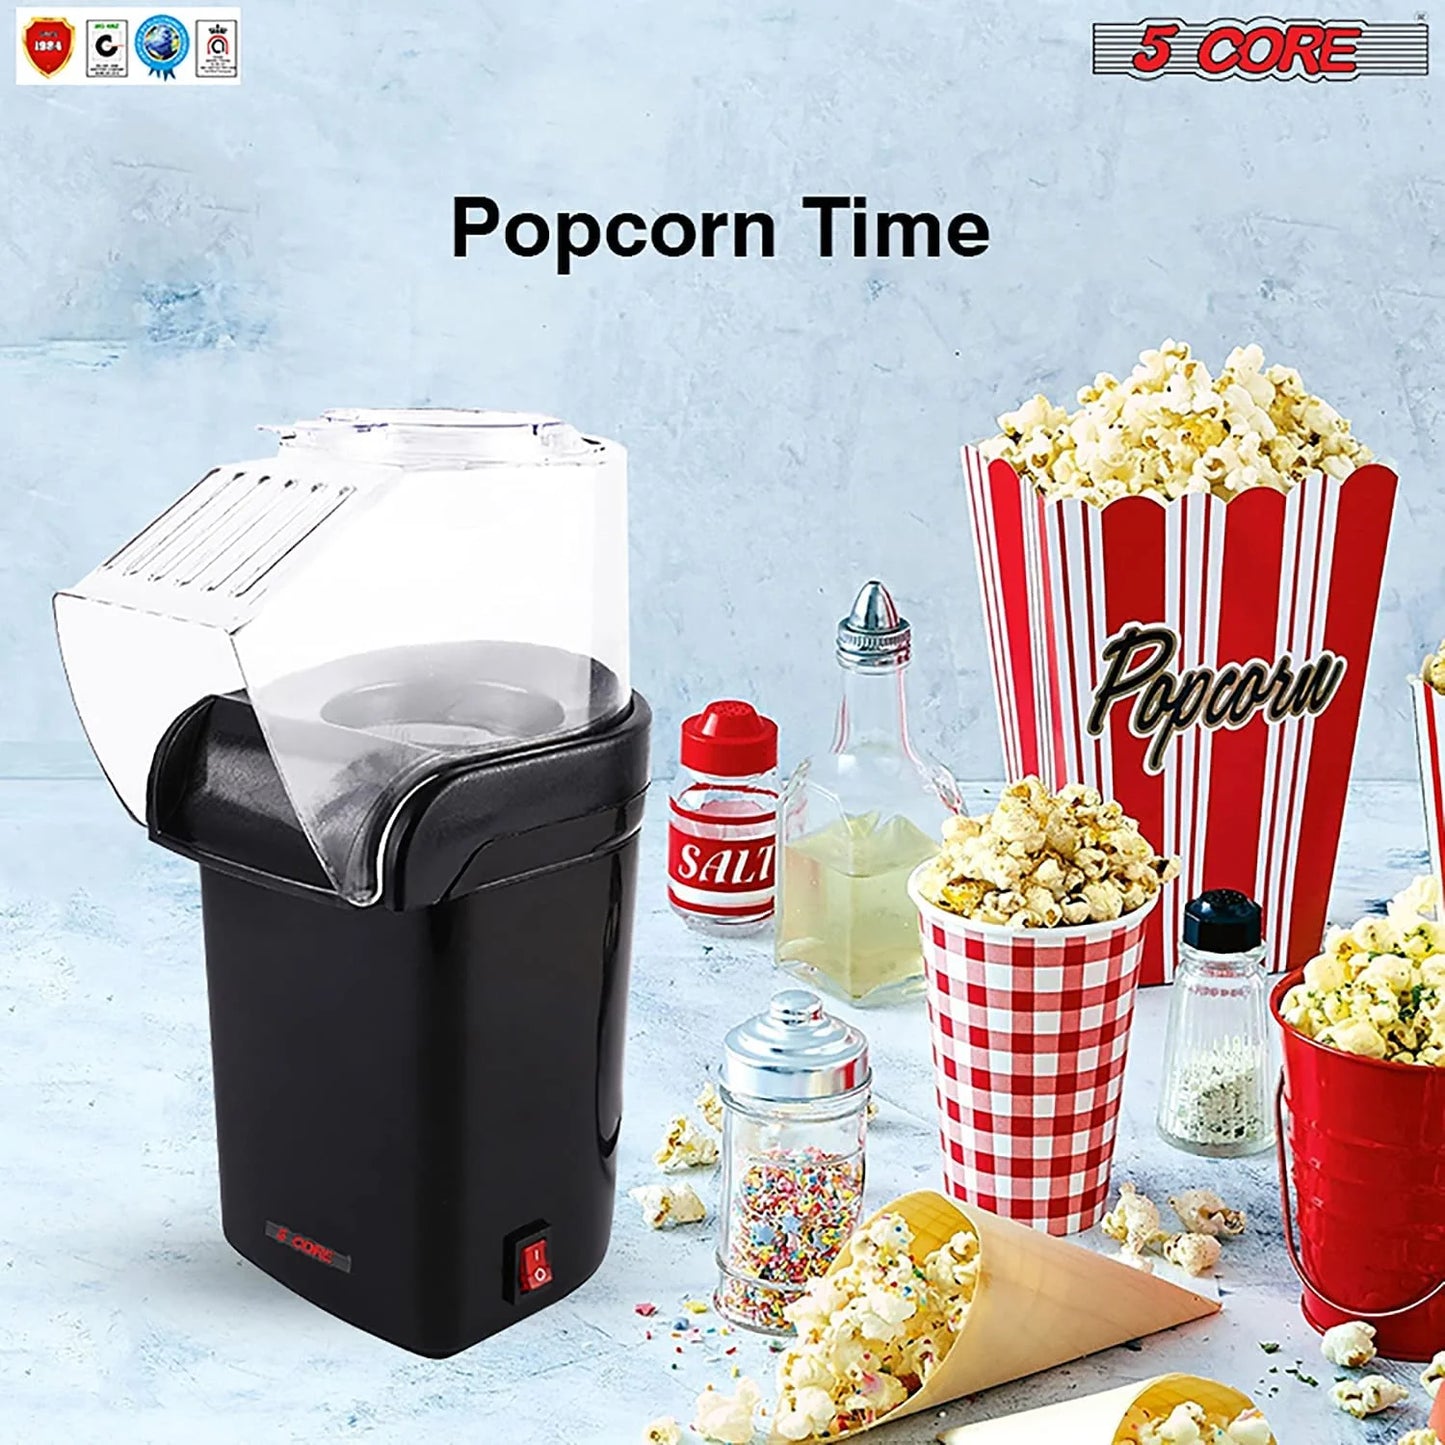 "5 Core Black Hot Air Popcorn Machine - 16 Cup Capacity, Compact Mini Popcorn Popper Maker - POP B"